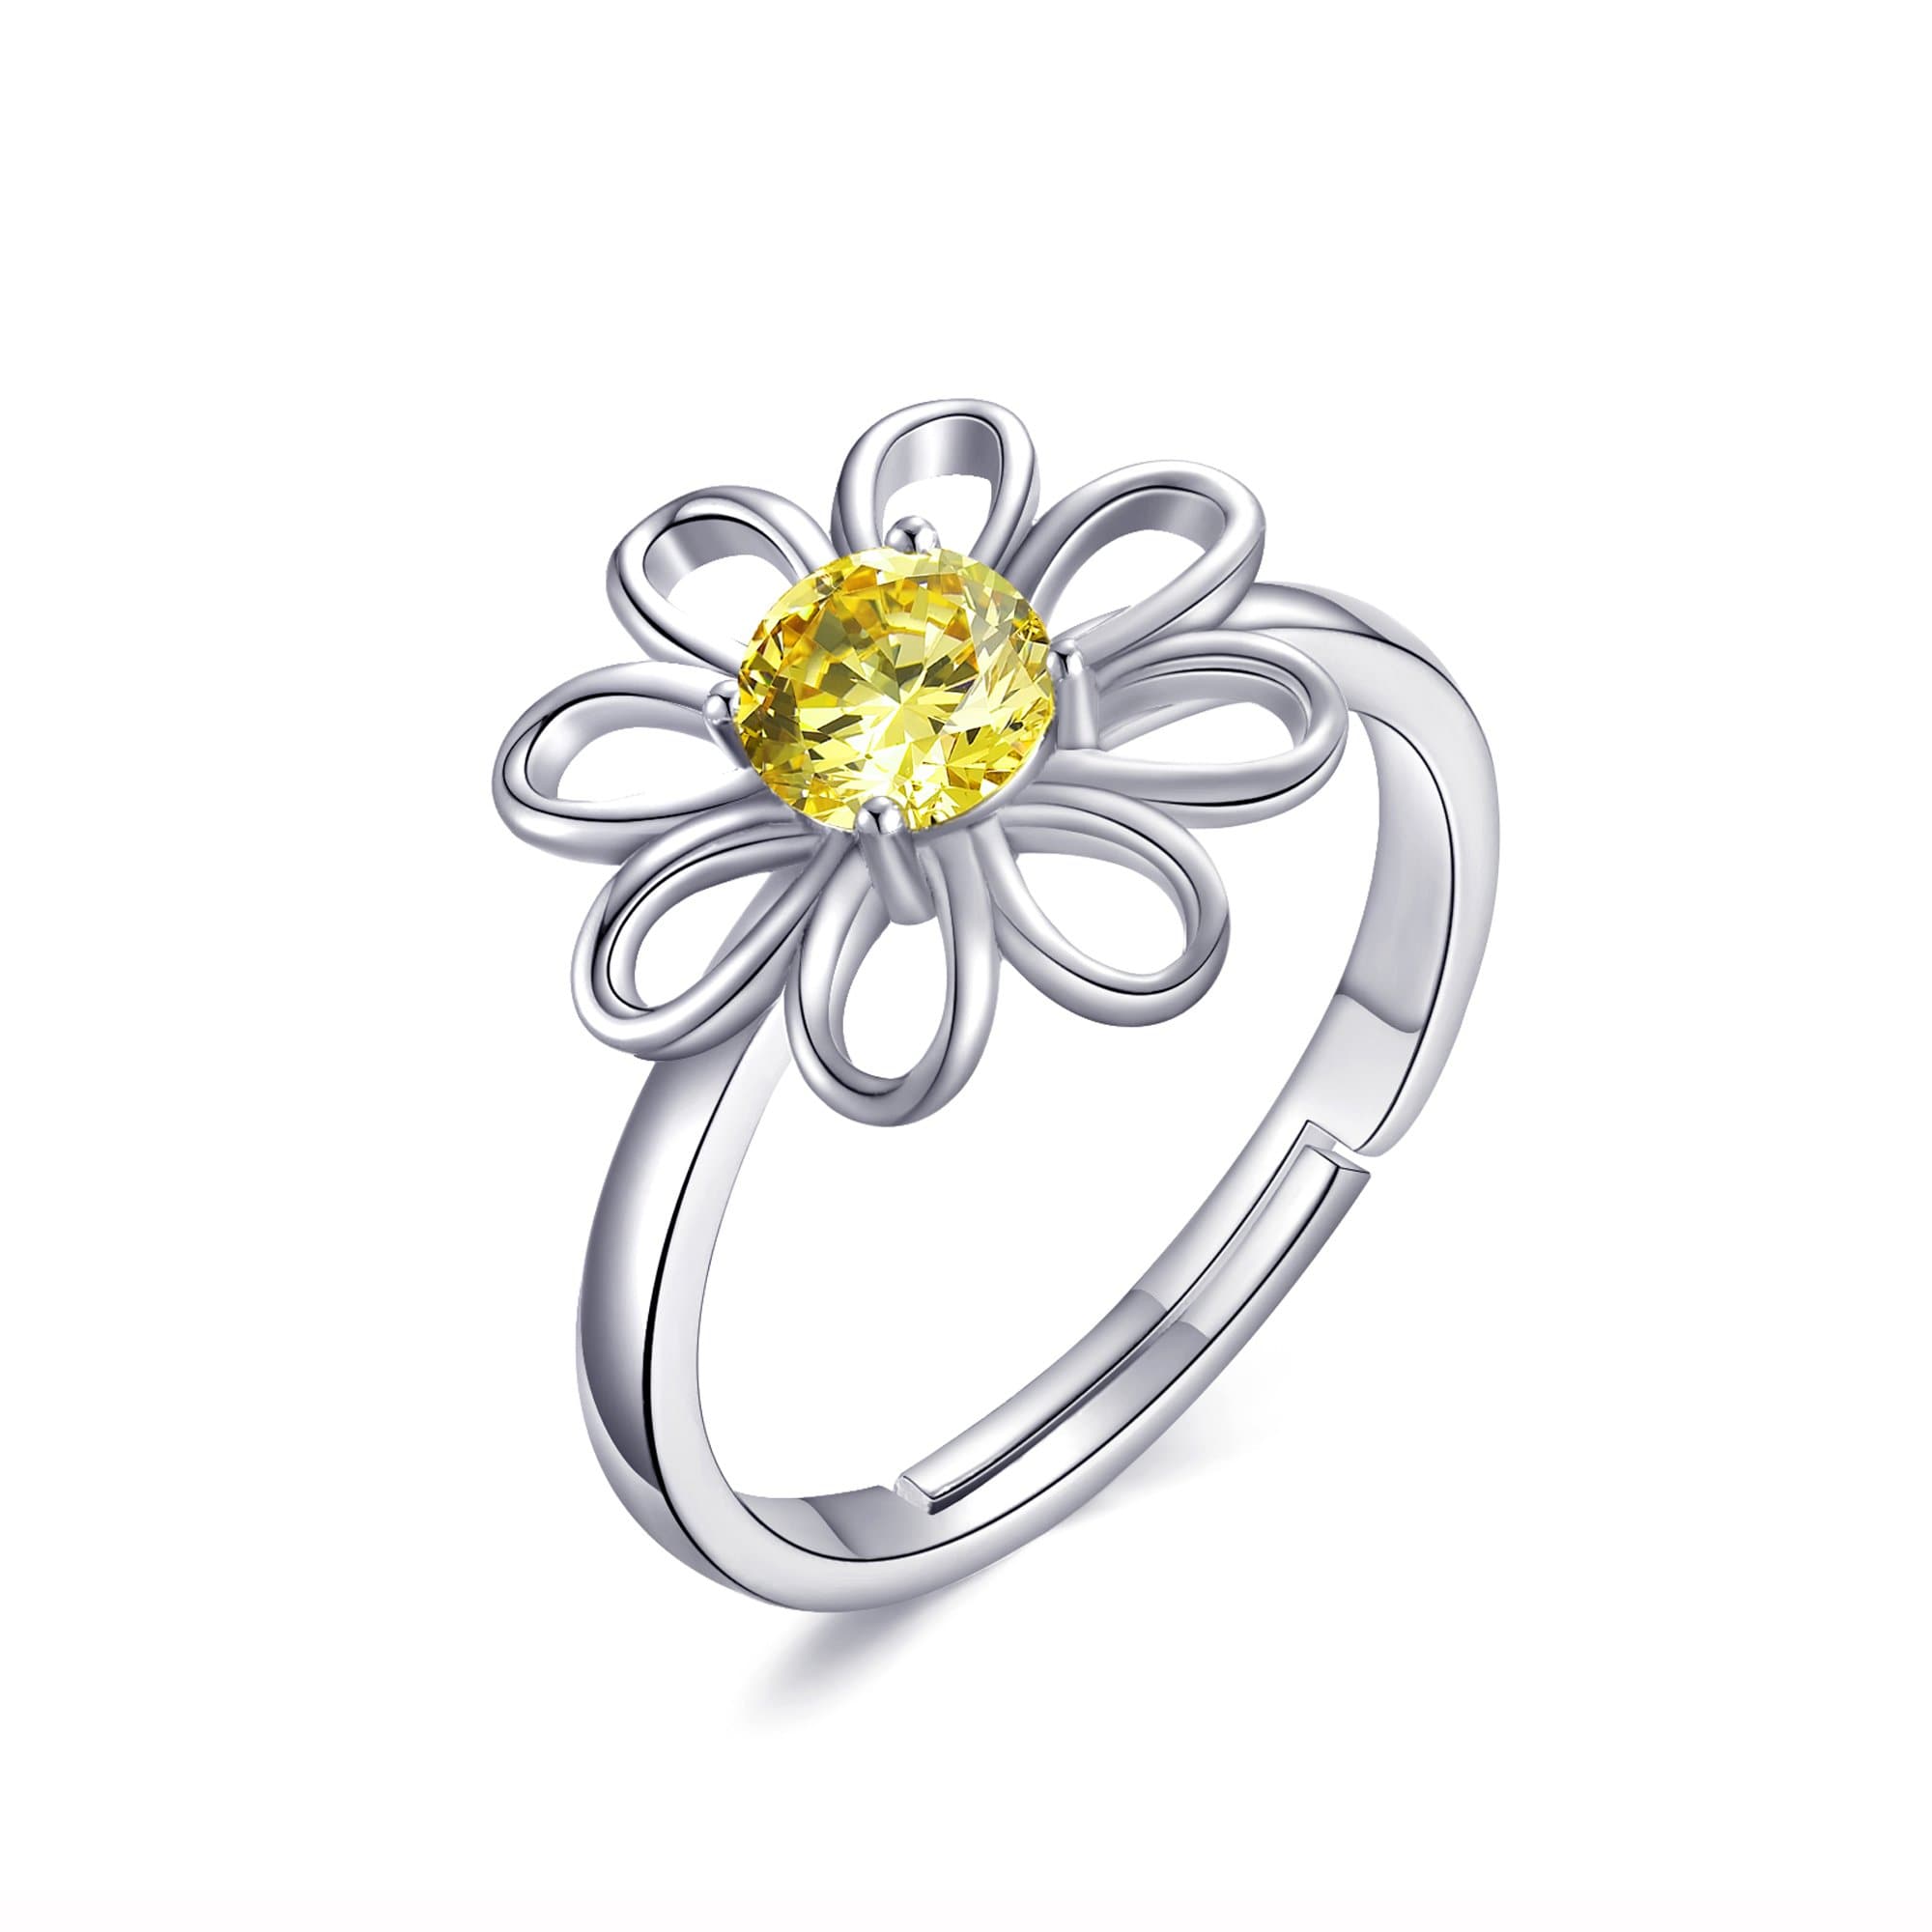 Adjustable Crystal Daisy Ring Created with Zircondia® Crystals by Philip Jones Jewellery